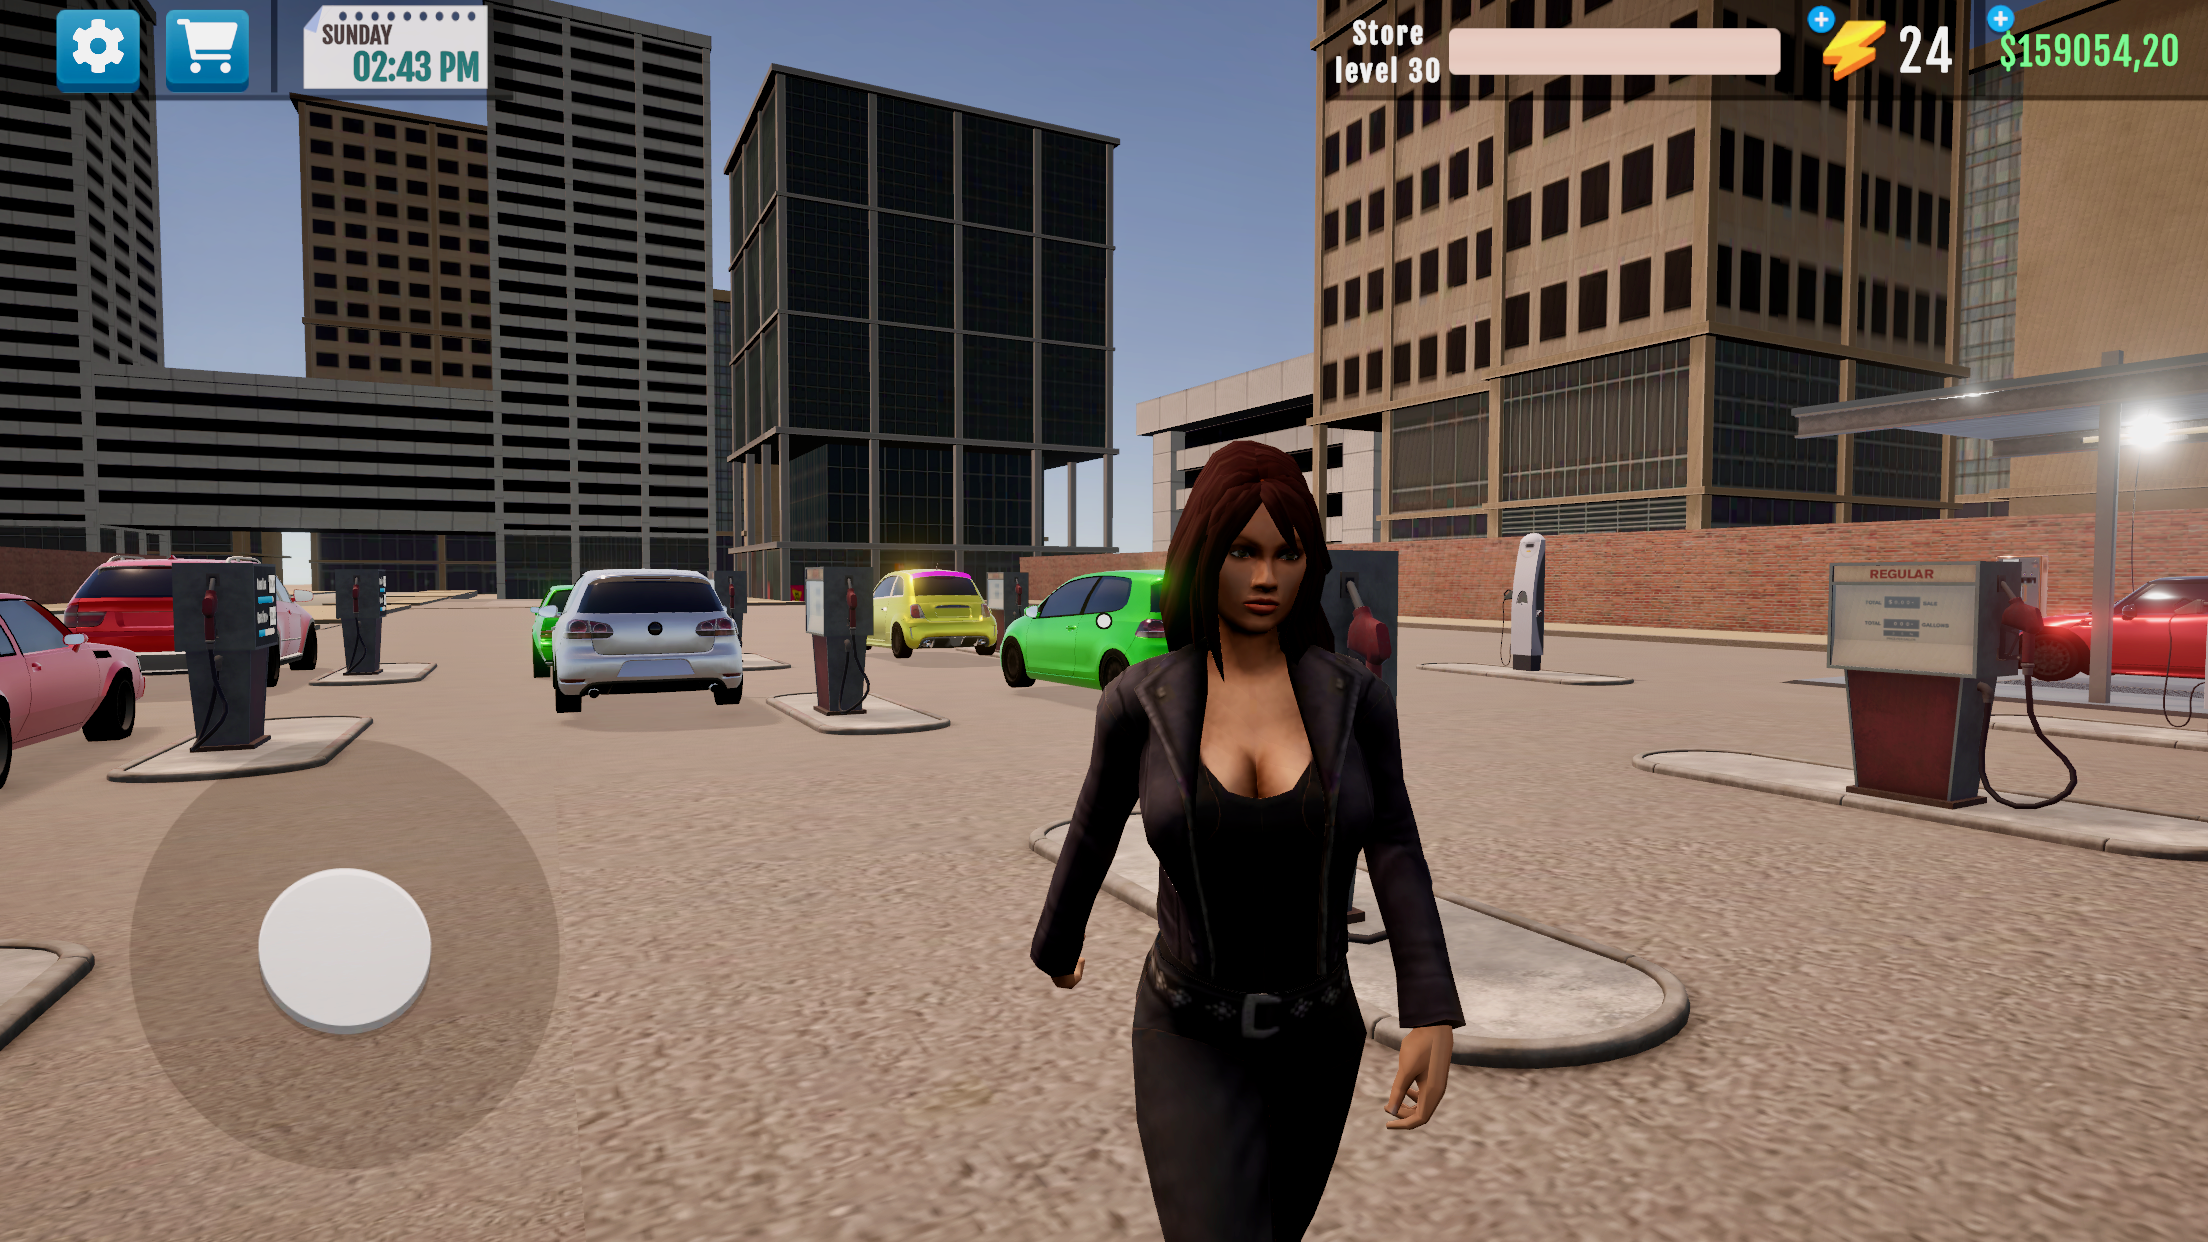 City Gas Station Simulator 3D遊戲截圖